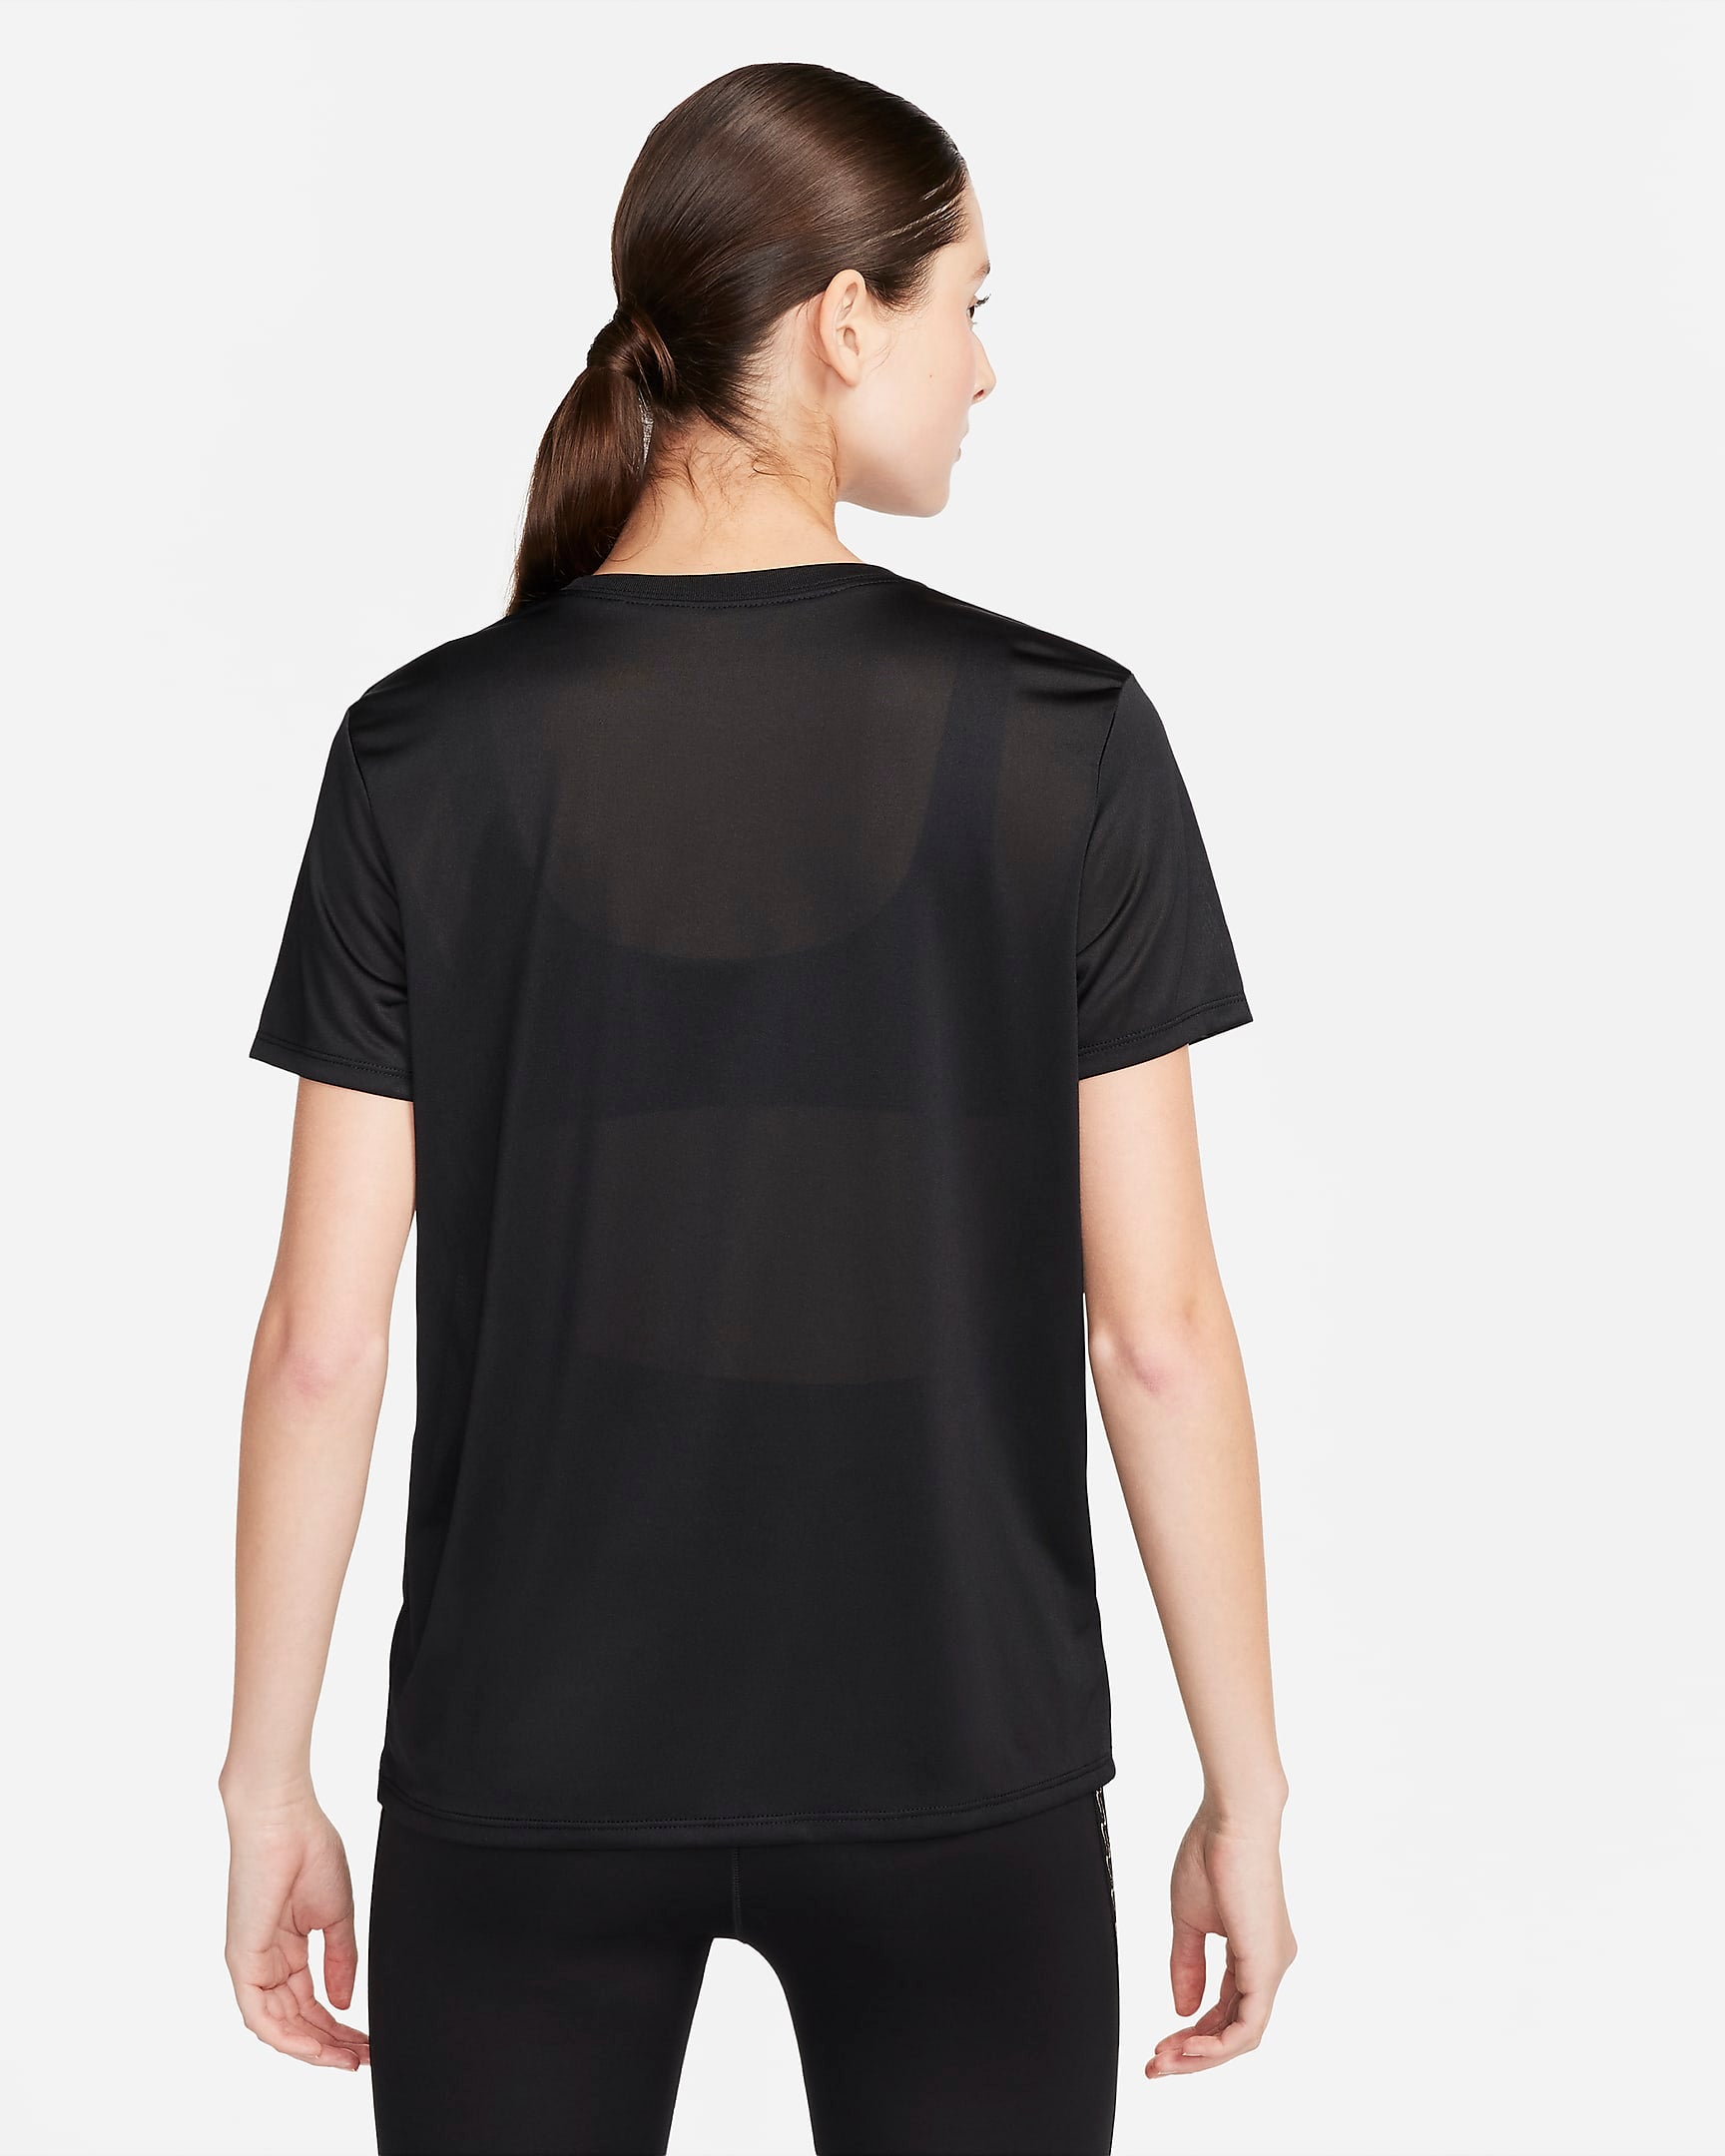 Women's Dri-FIT Graphic T-Shirt - FQ4975